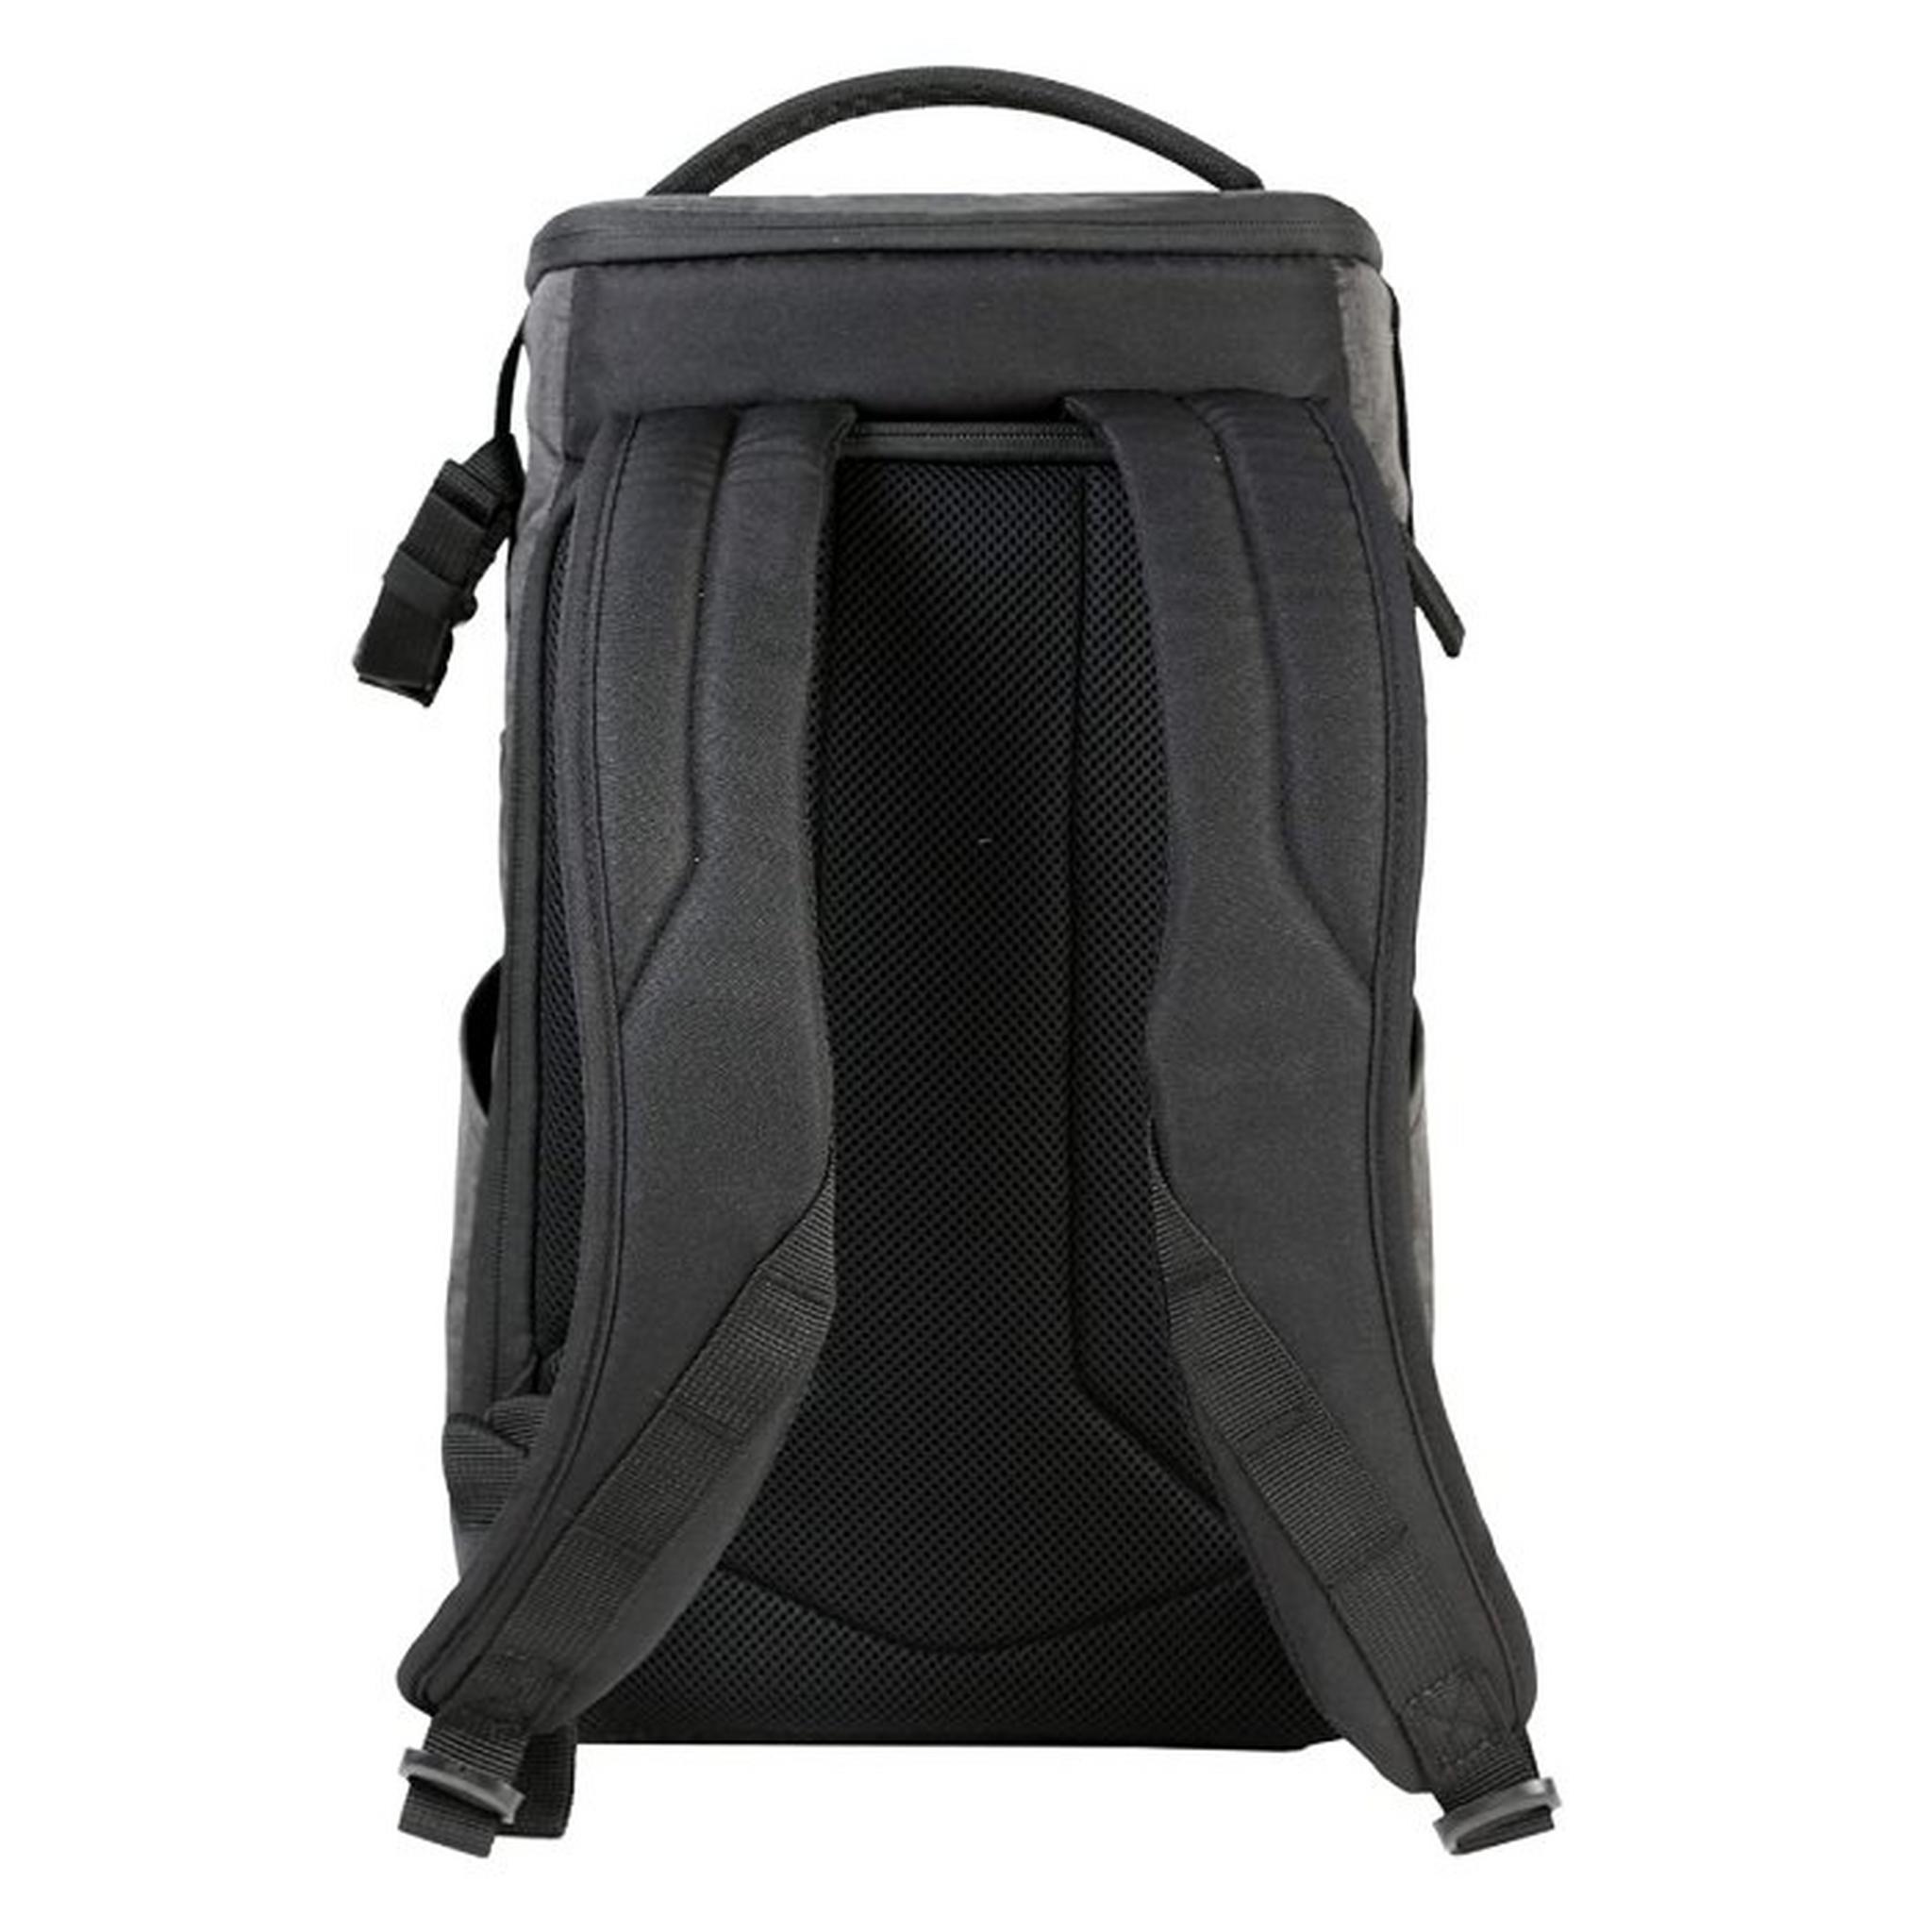 Vanguard Vesta Aspire 41 GY Camera Backpack - Grey